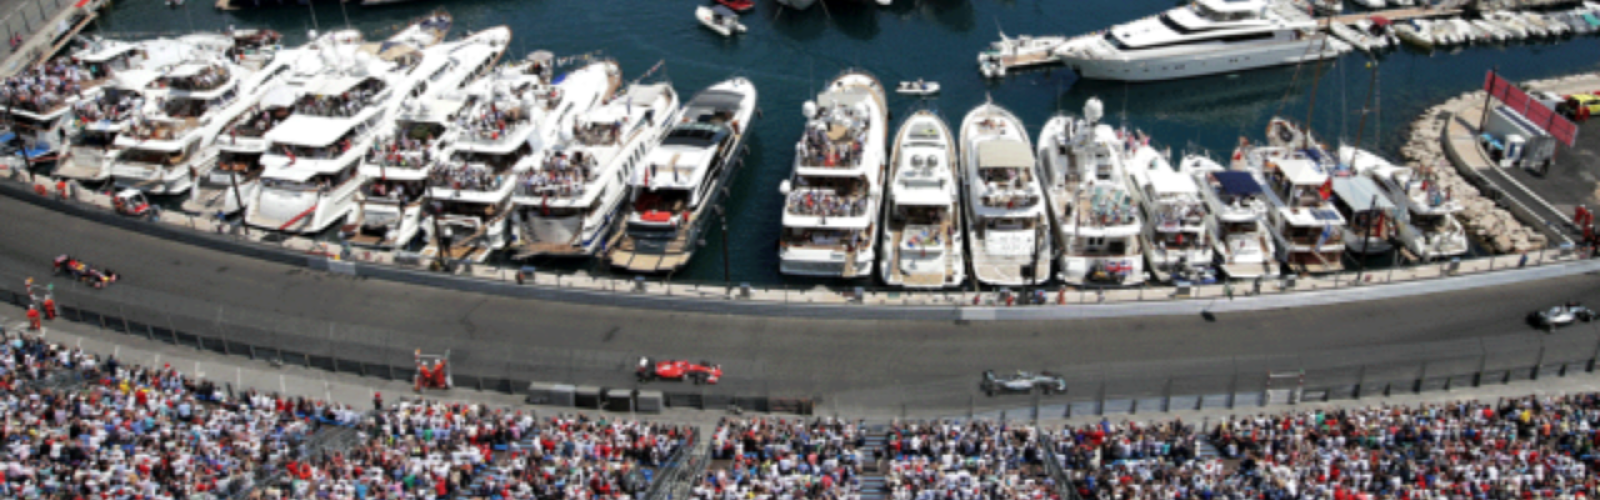 Monaco Formula 1 Grand Prix travel & ticket packages image